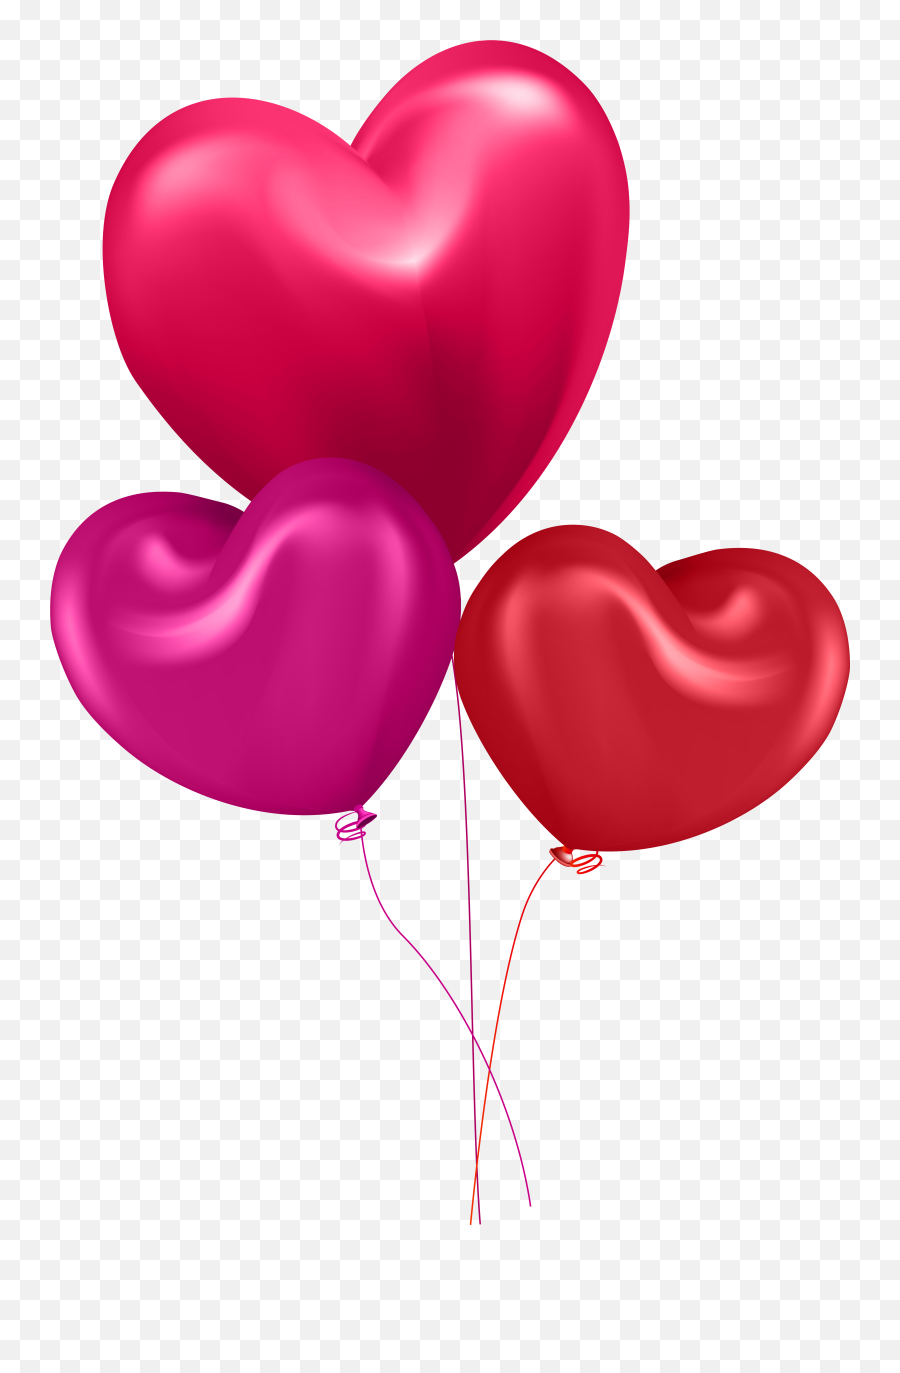 Heart Balloon Png - Clipart Hearts Balloon Heart Balloons Heart Balloons Transparent Background,Balloon Transparent Background